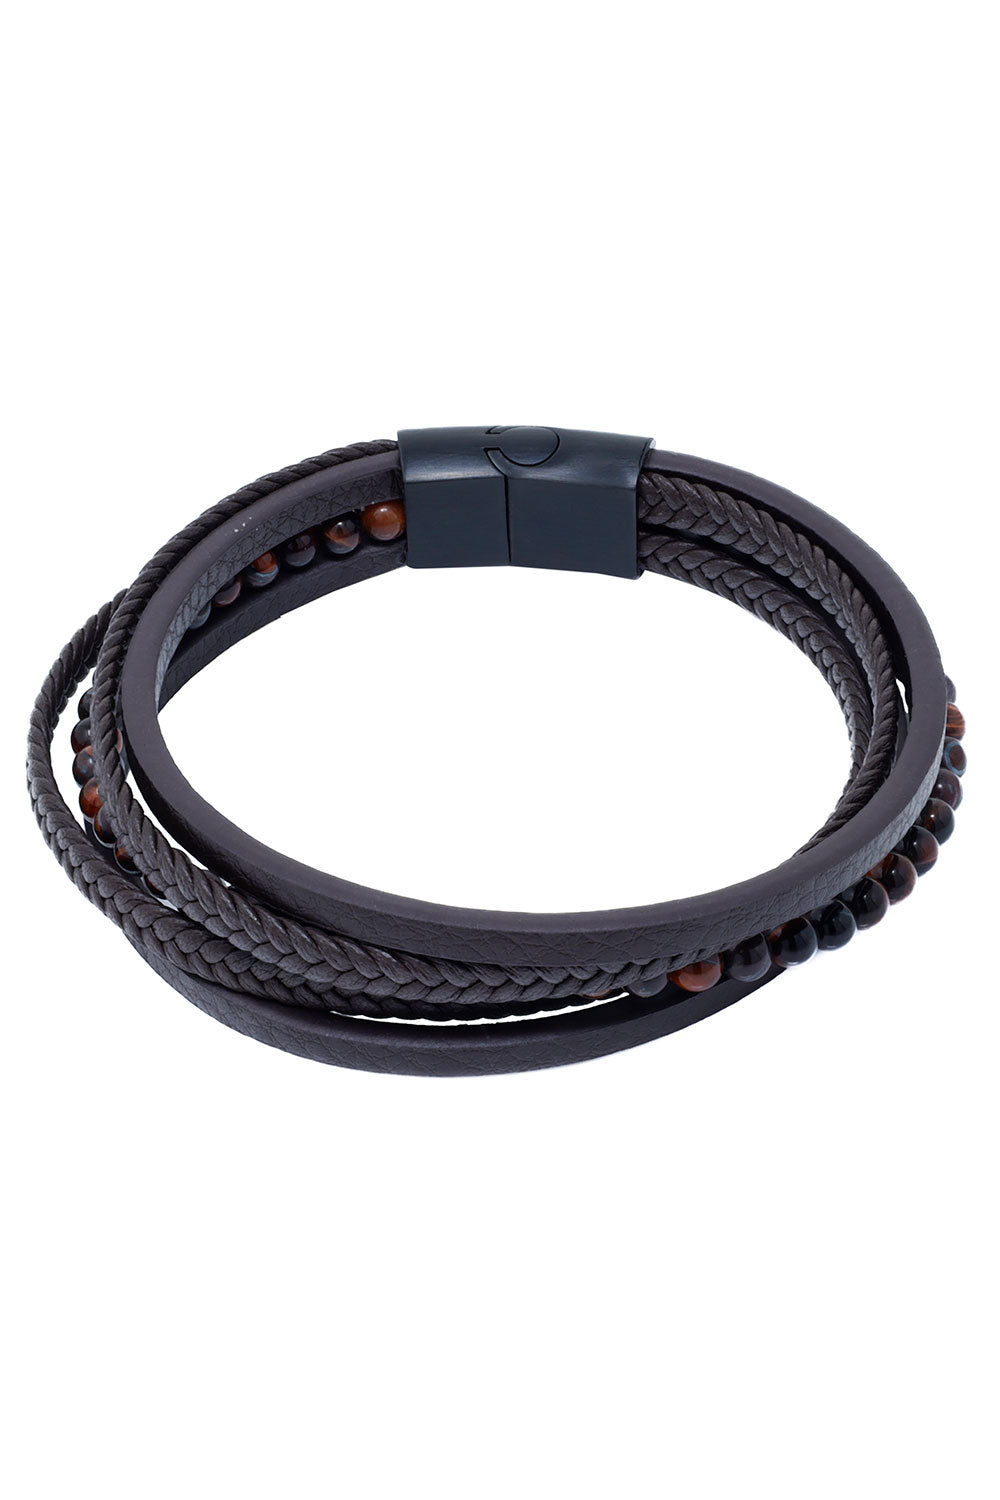 Barabas Unisex Obsidian Multi-Layer Leather Bangle Bracelets 4BMS07 Brown